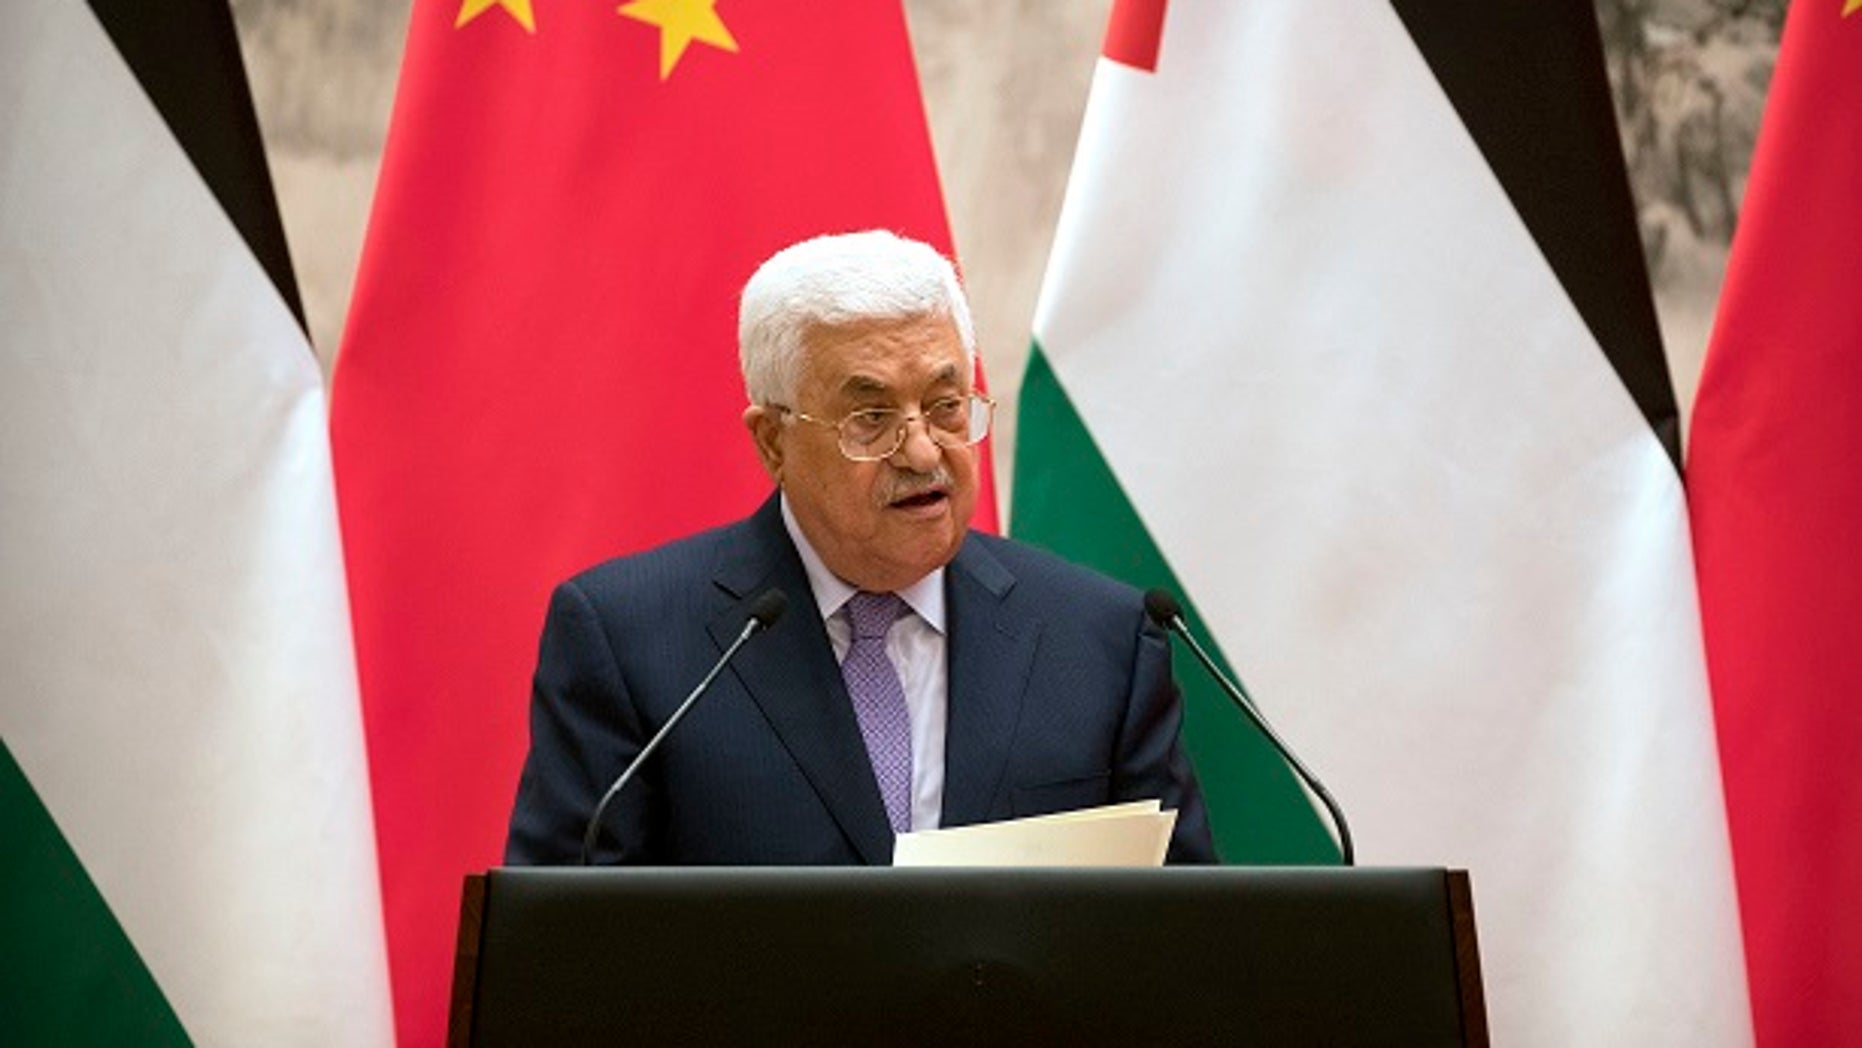 Palestinian President Mahmoud Abbas in hospital for checkup, spokesman